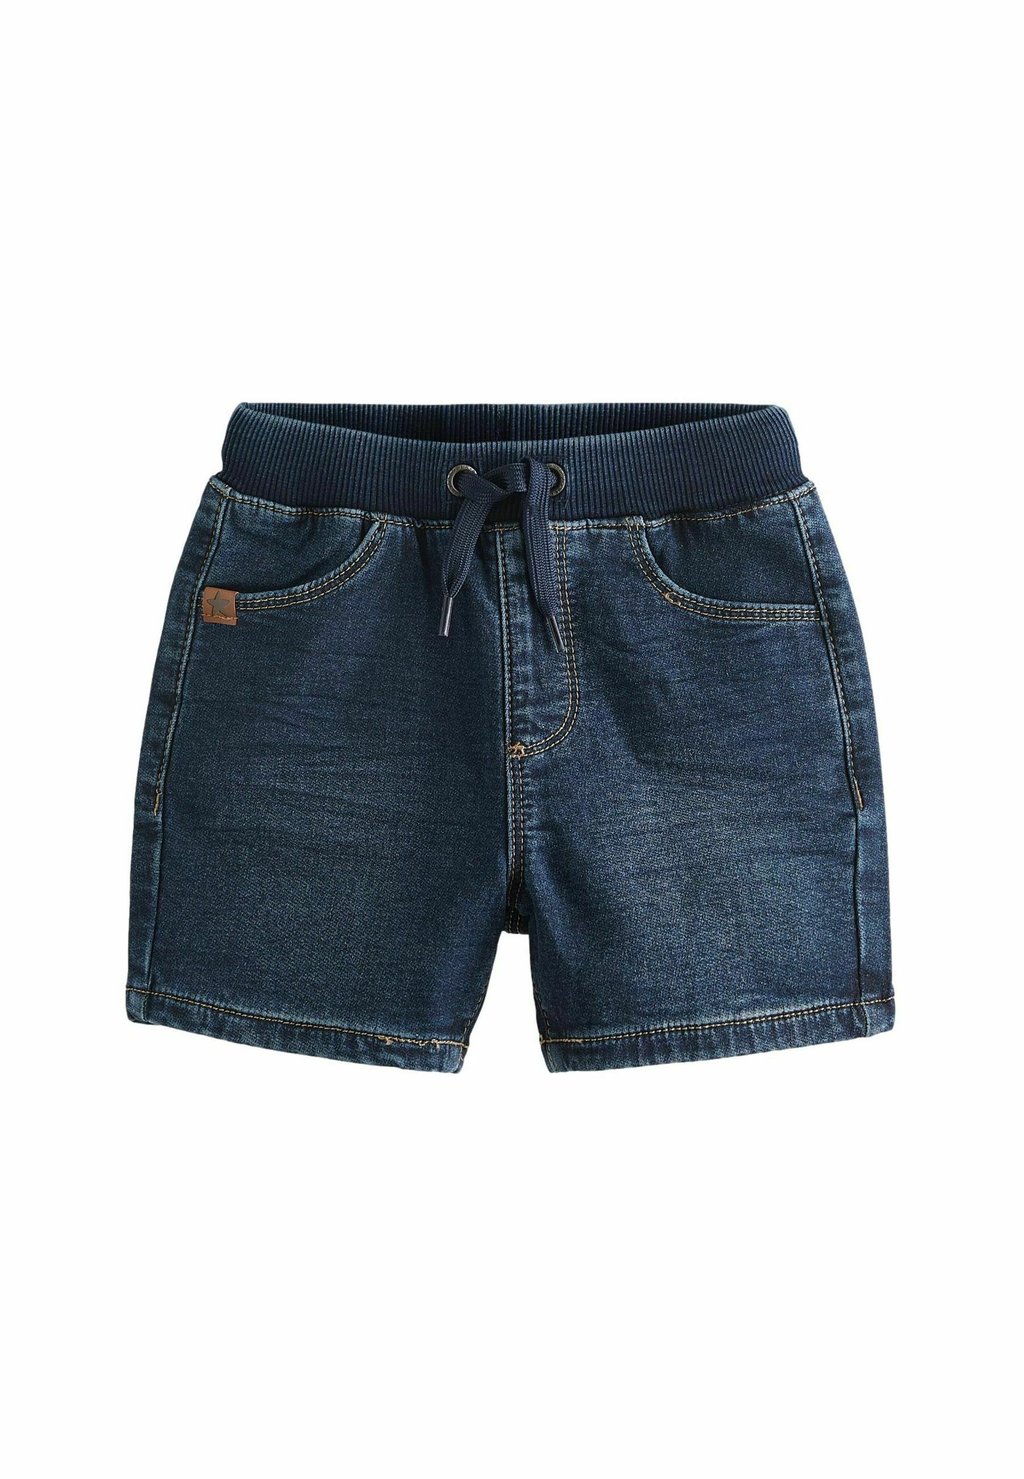 Джинсовые шорты PULL-ON REGULAR FIT Next, цвет dark wash джинсовые шорты button shorts next цвет denim dark wash